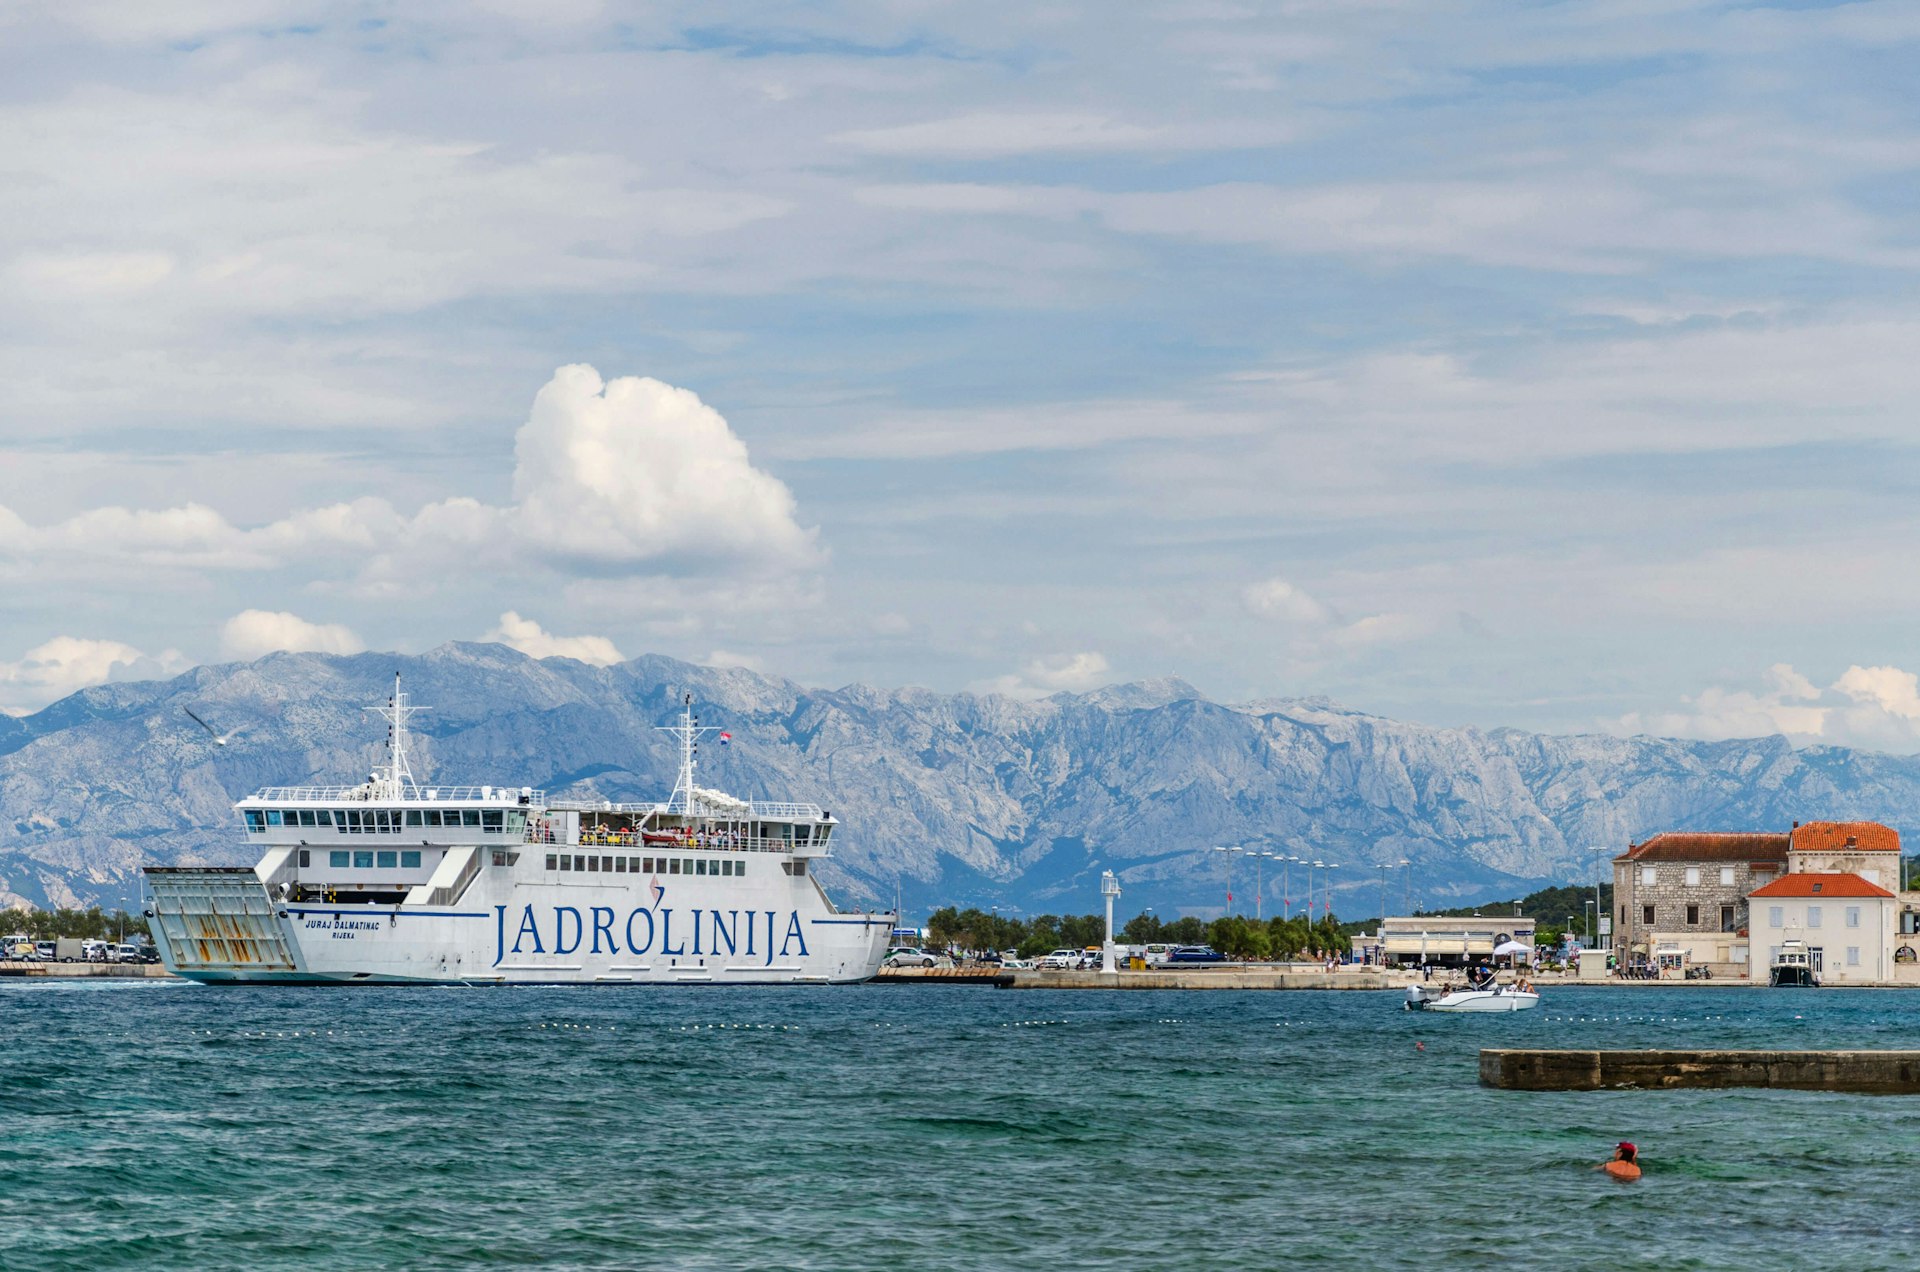 Picturesque view of Jadrolinija ferry on the way to Supetar, Croatia